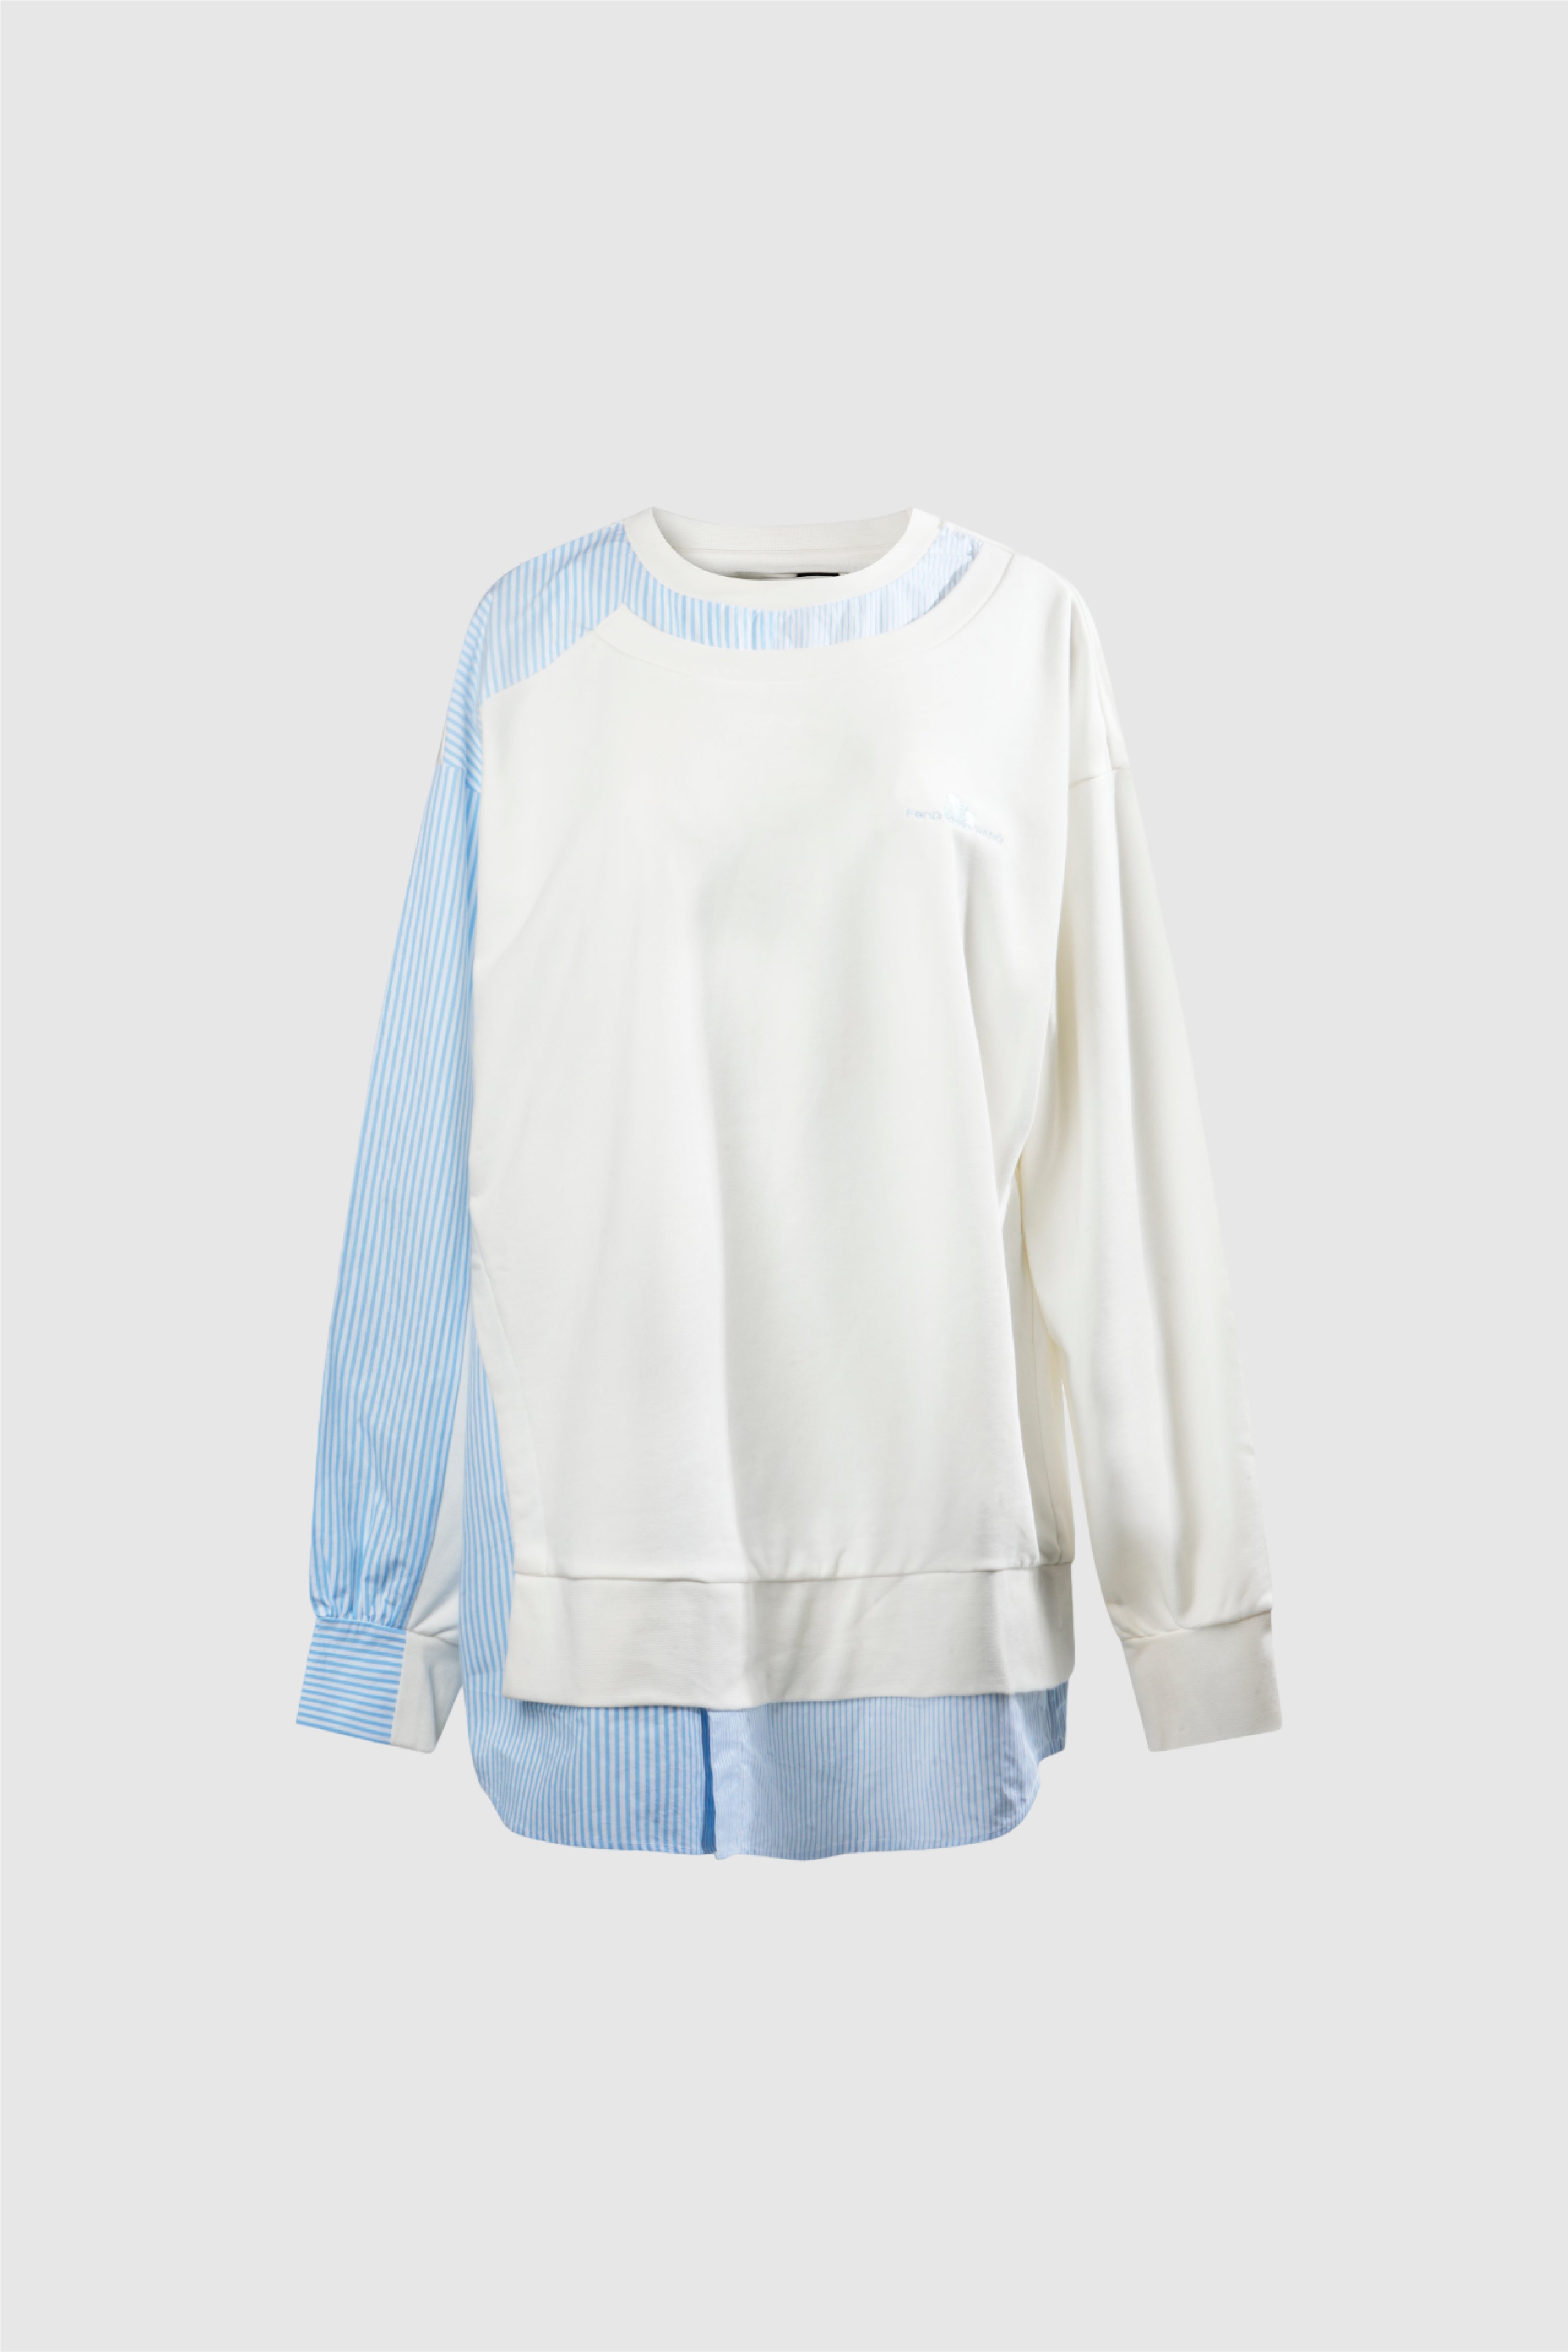 Selectshop FRAME - FENG CHEN WANG Layered Stripe Sweater Sweats-knits Concept Store Dubai